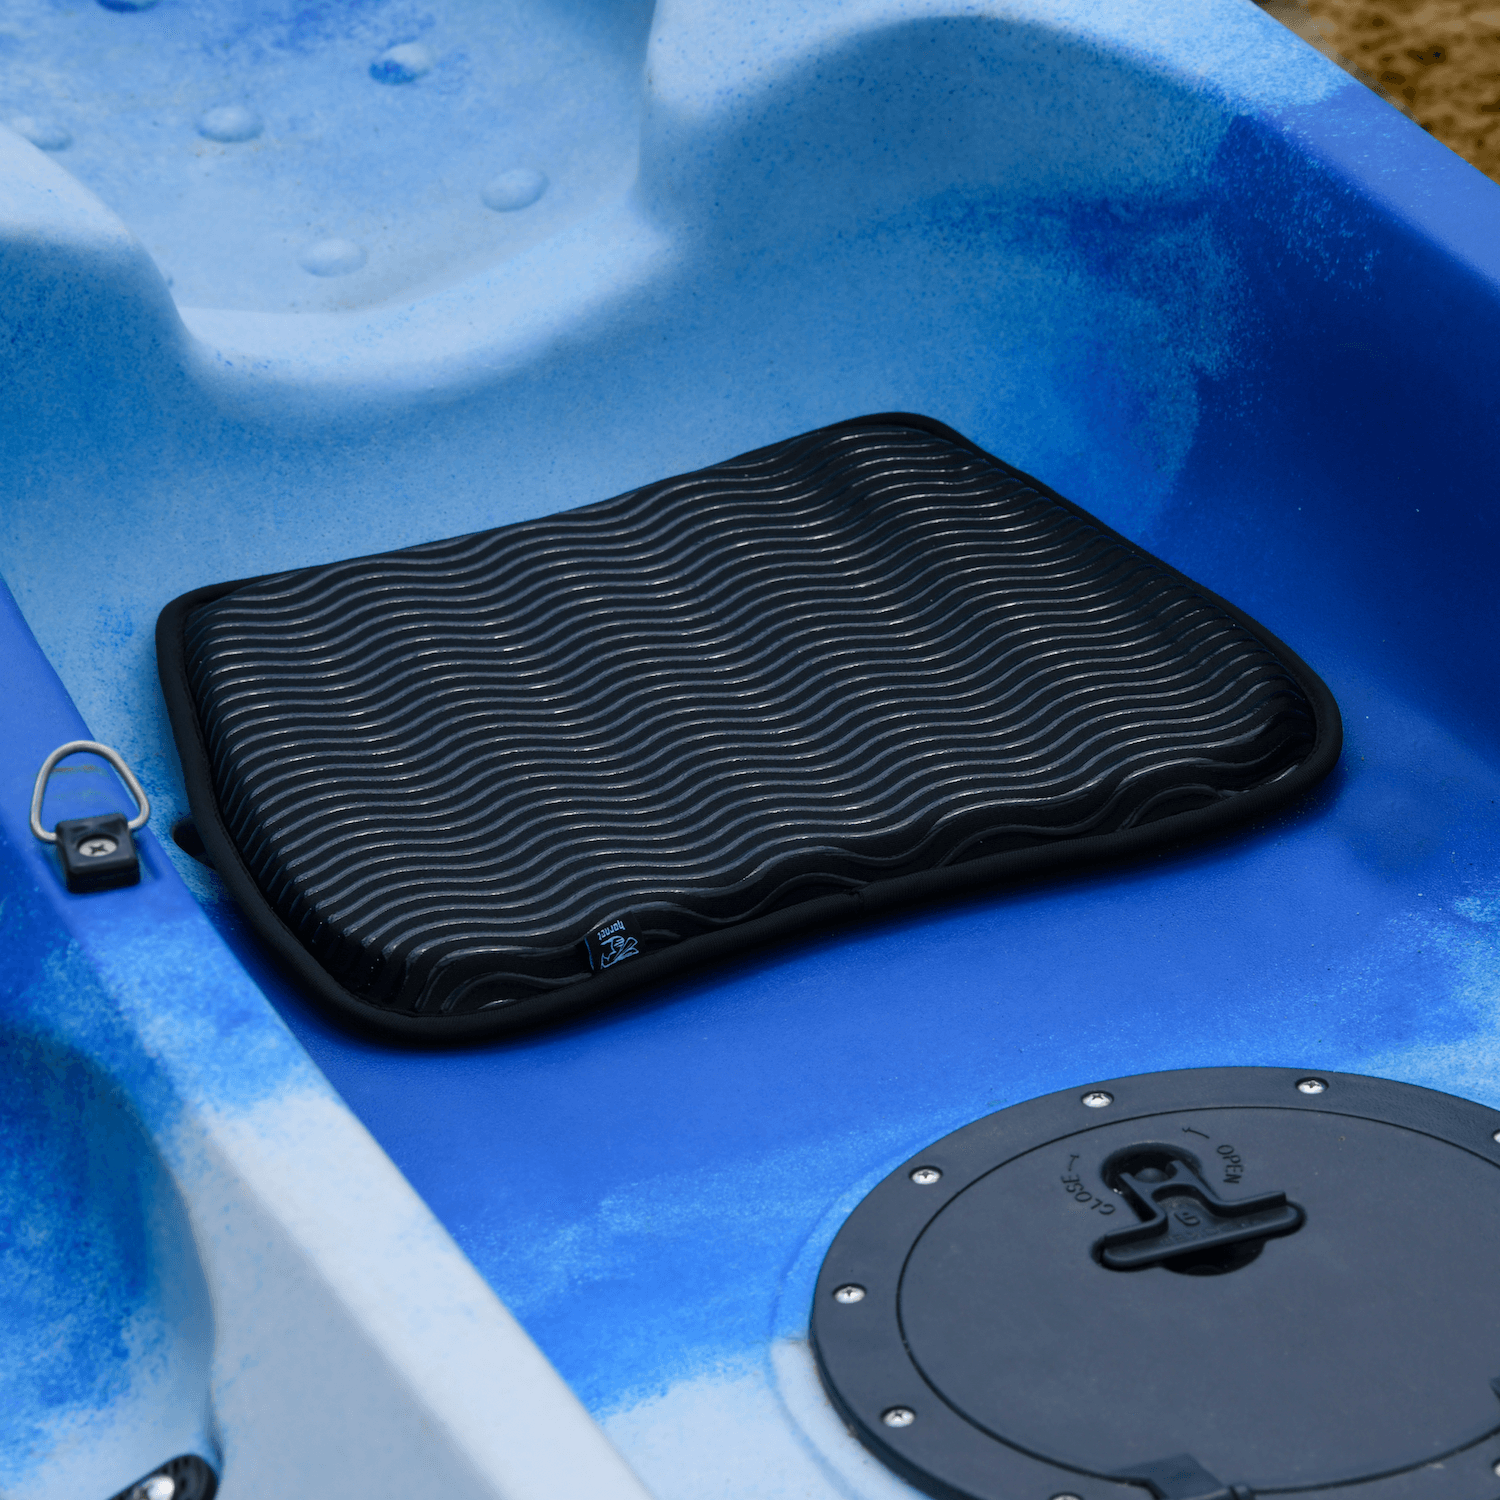 Short Kayak Foam Seat Cushion - Extent Paddle Gear